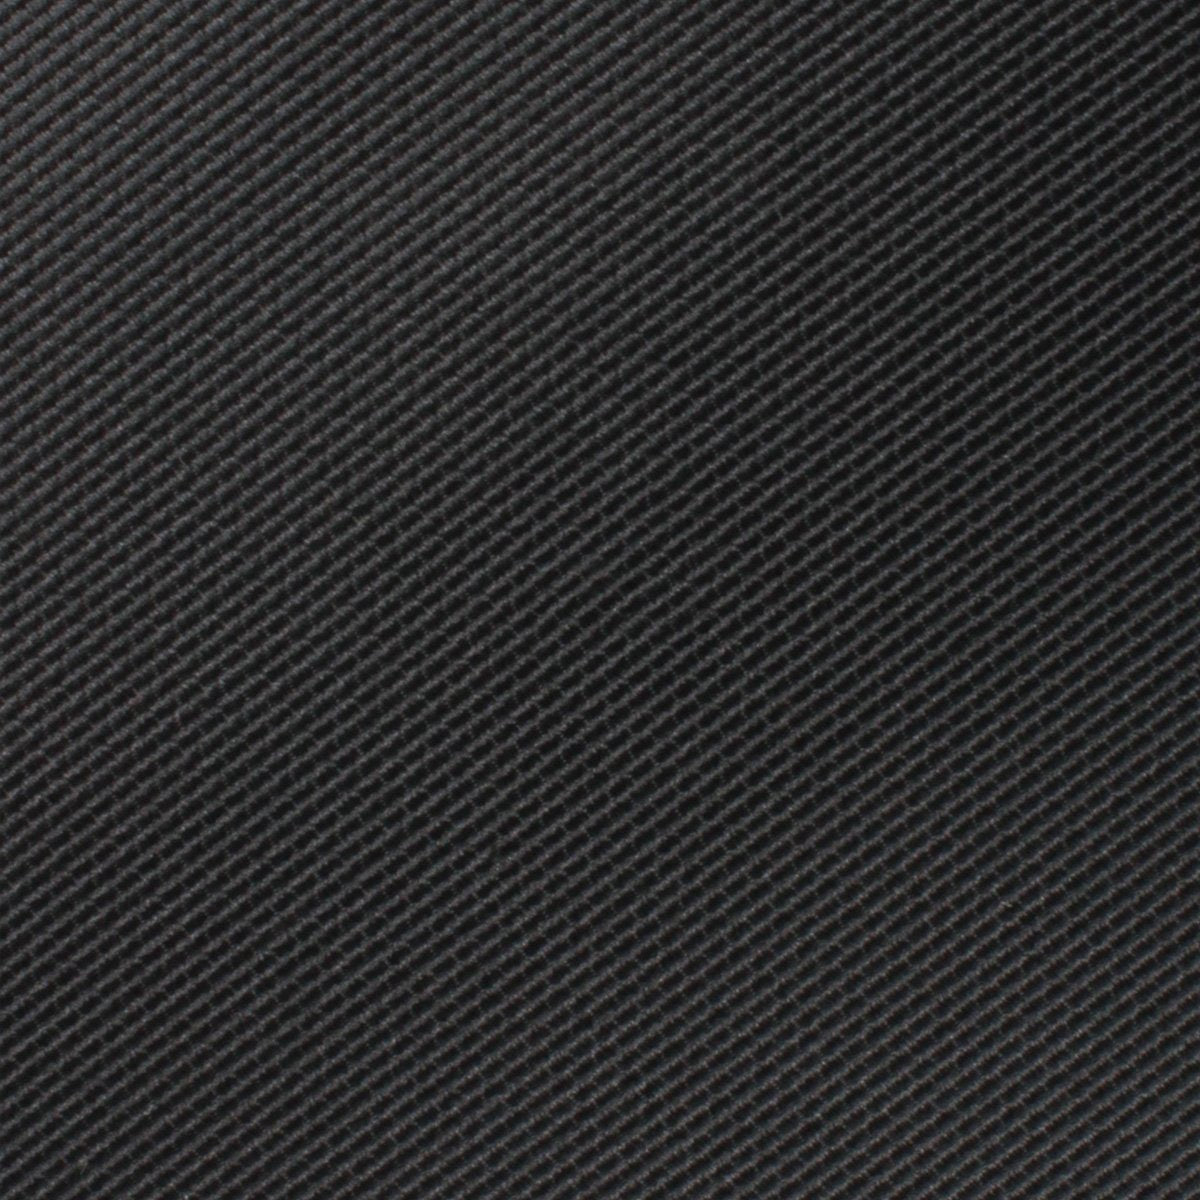 Black Weave Pocket Square Fabric